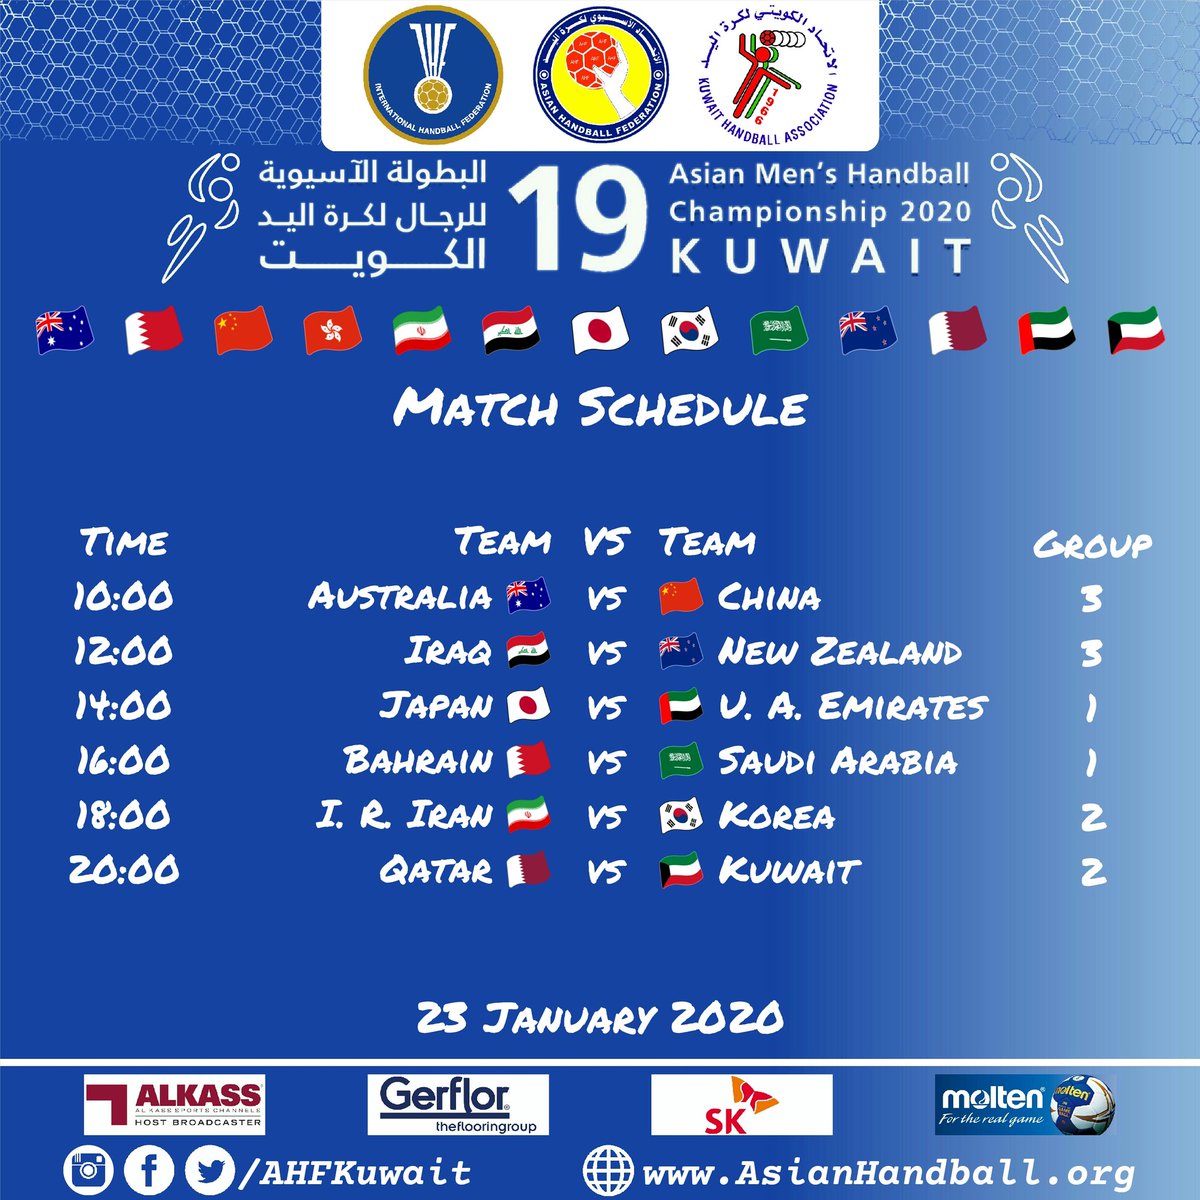 Match schedule | 23 January | 19th Asian Men's Handball Championship | Kuwait 2020 🇰🇼 #AsianHandball2020 #Kuwait2020 #AHFKuwait